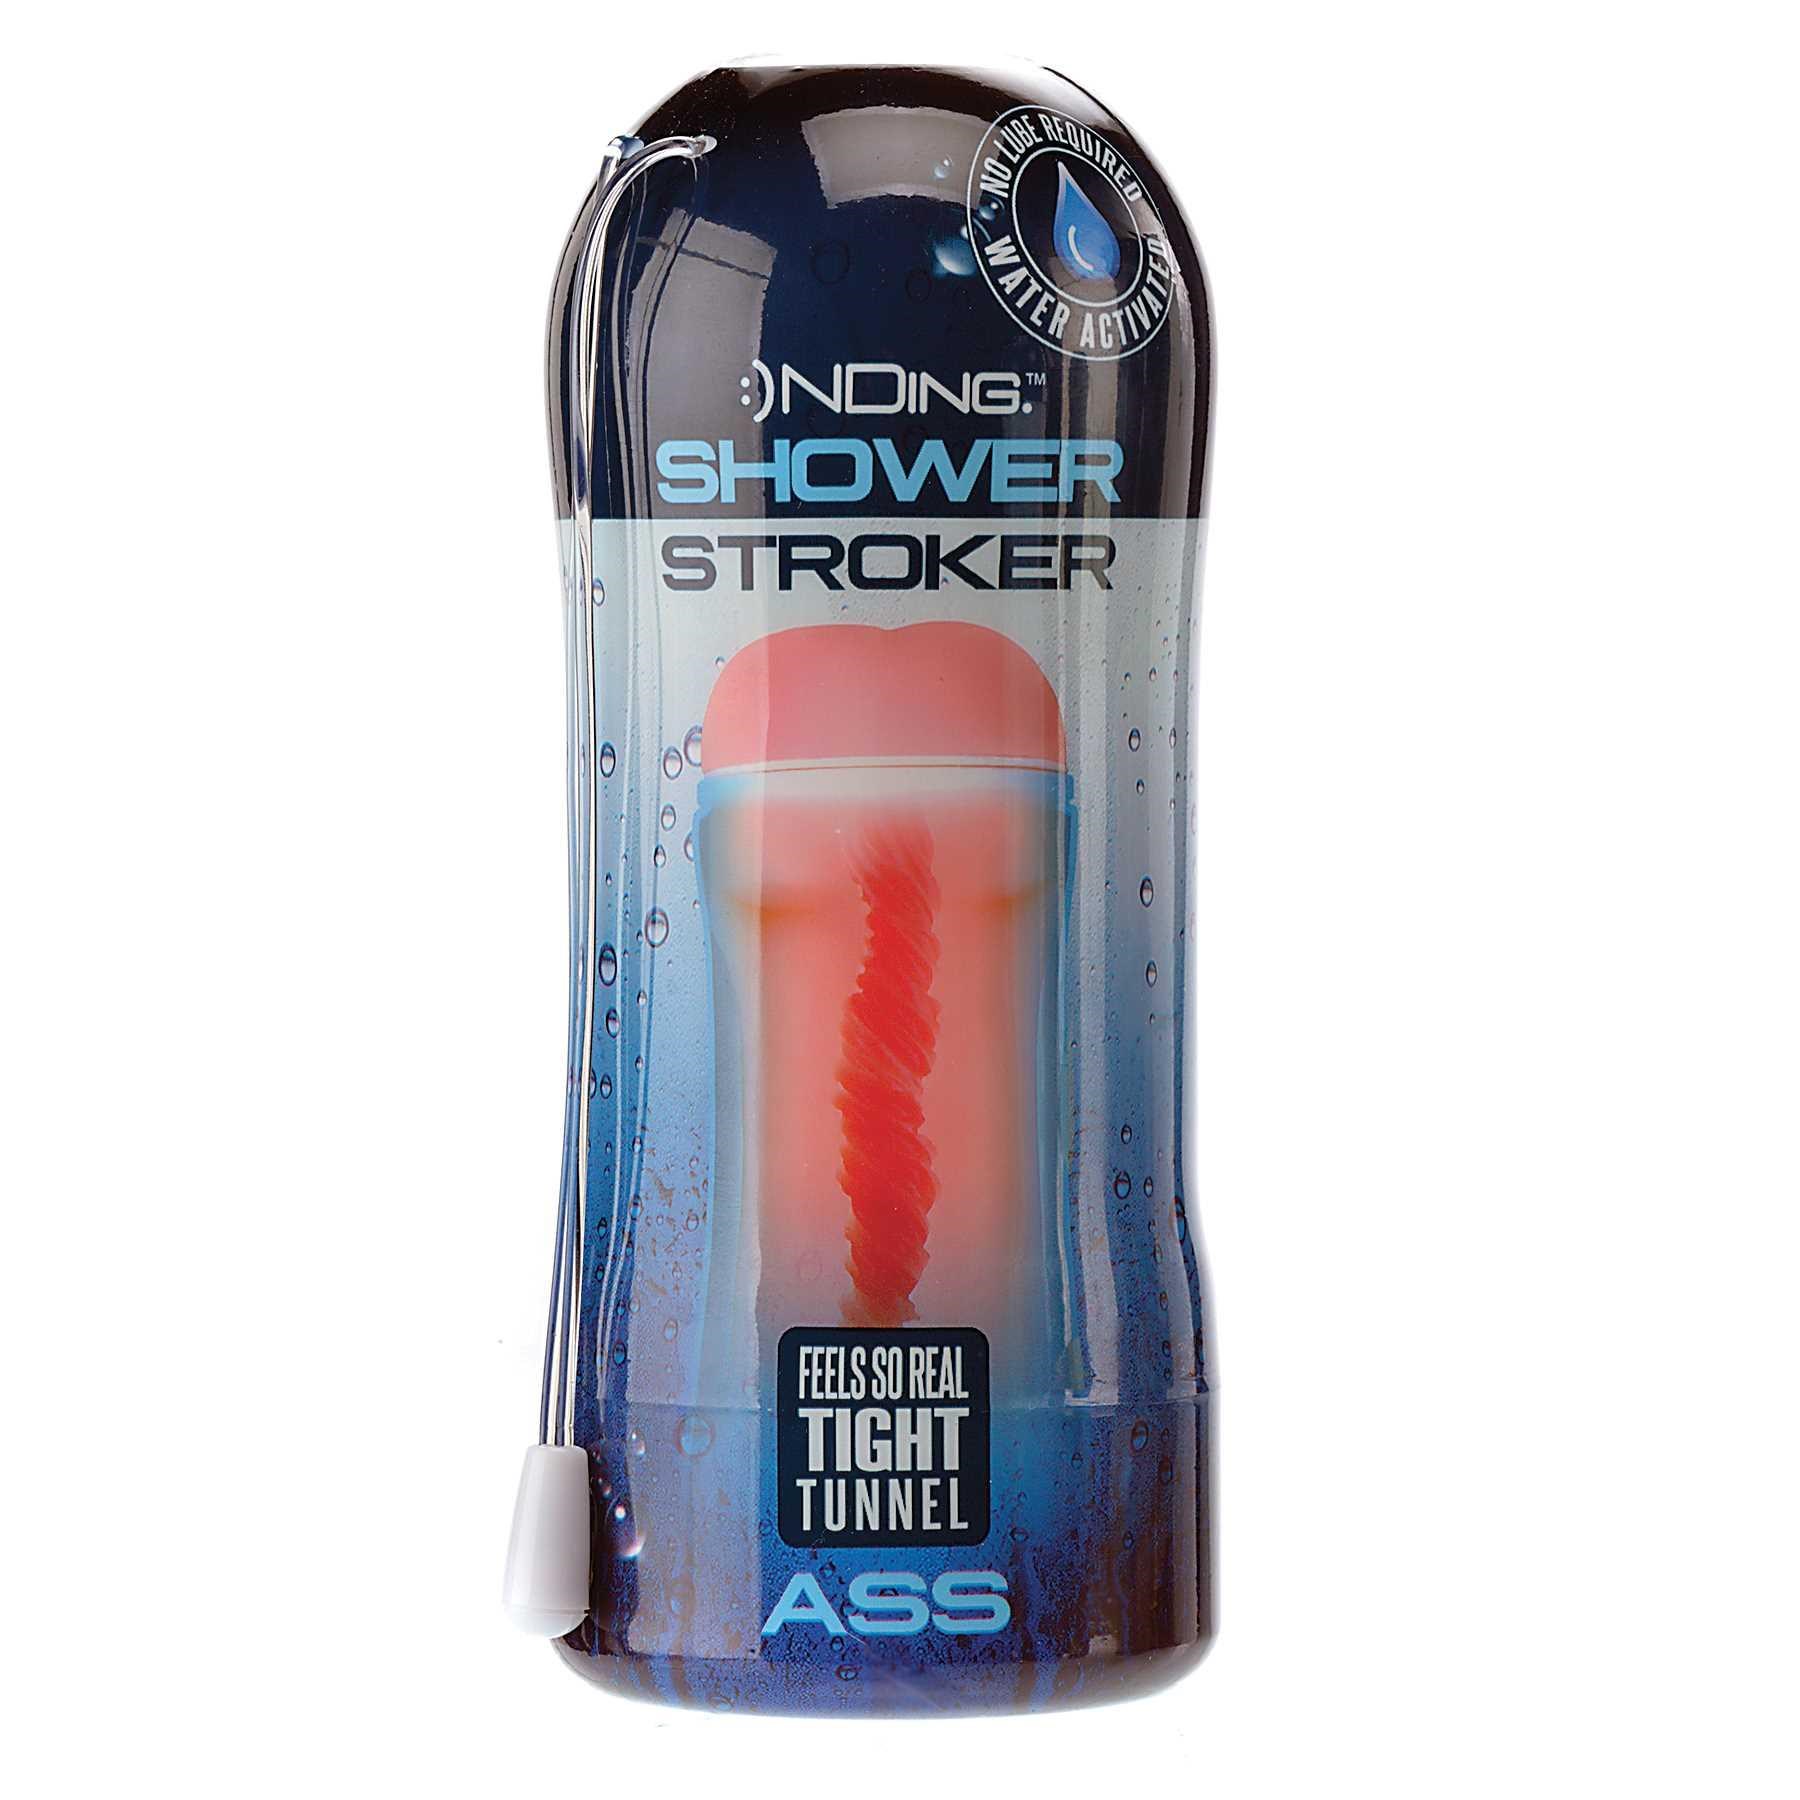 Shower Stroker Ass male masturbator